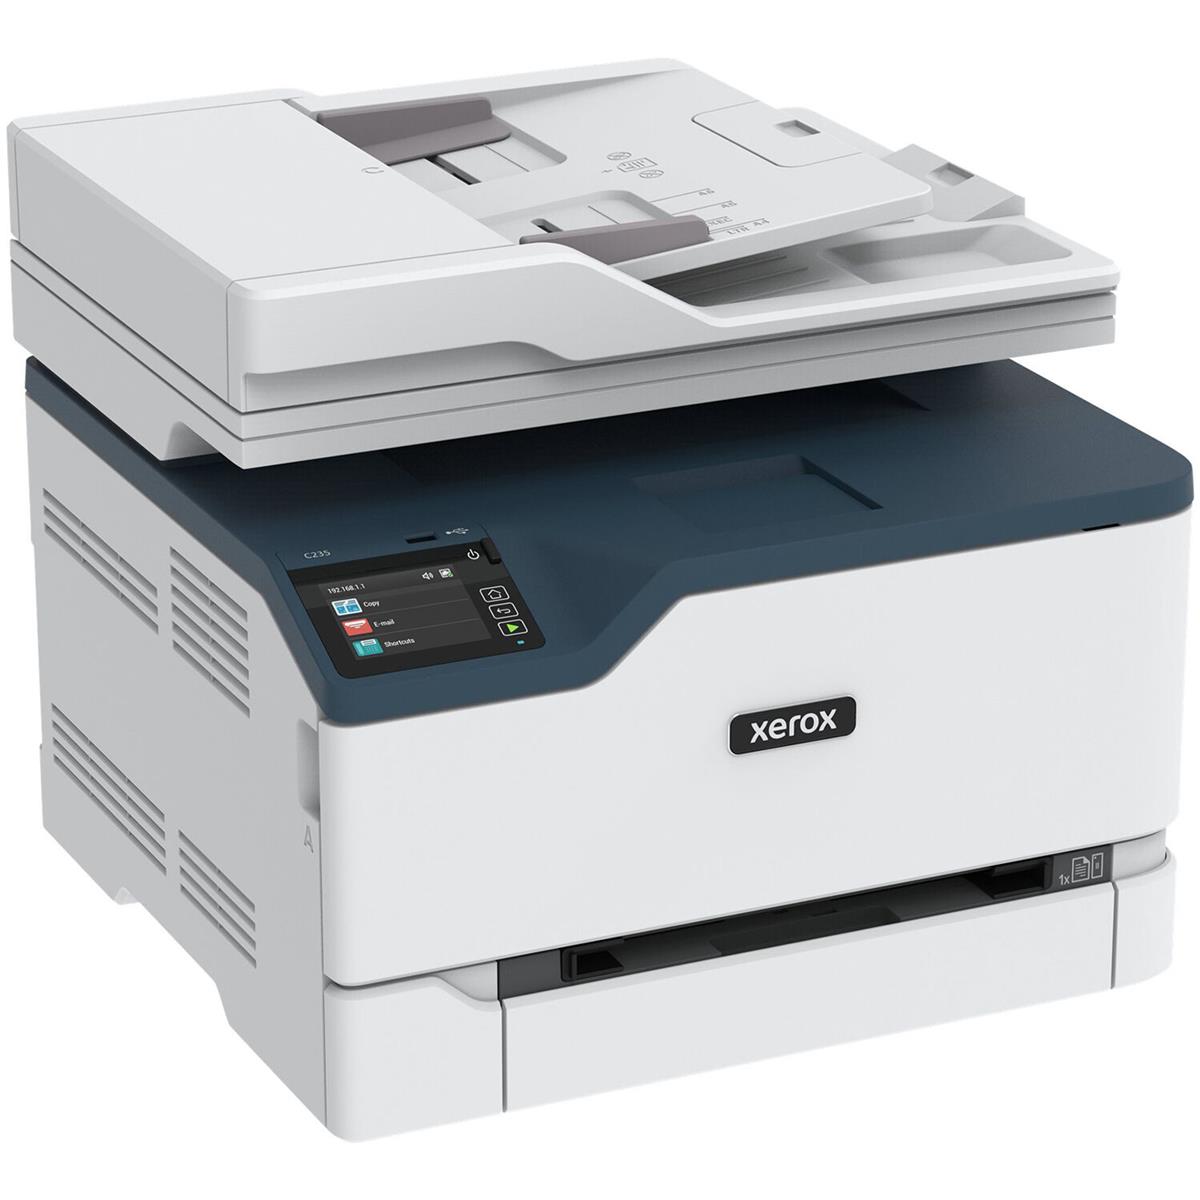 Image of Xerox C235 Color Laser Multifunction Printer